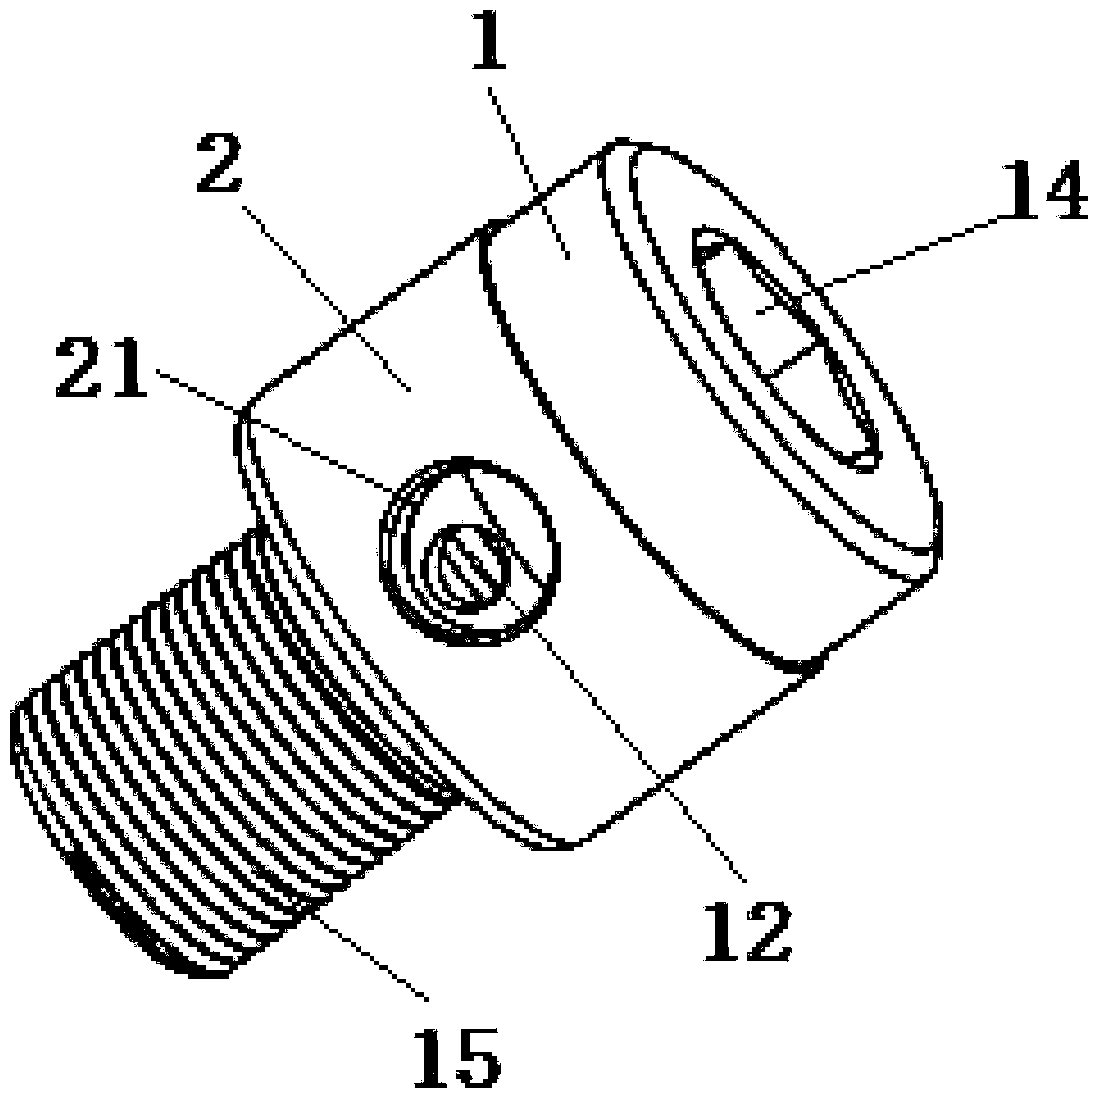 A hydraulic pressure relief valve